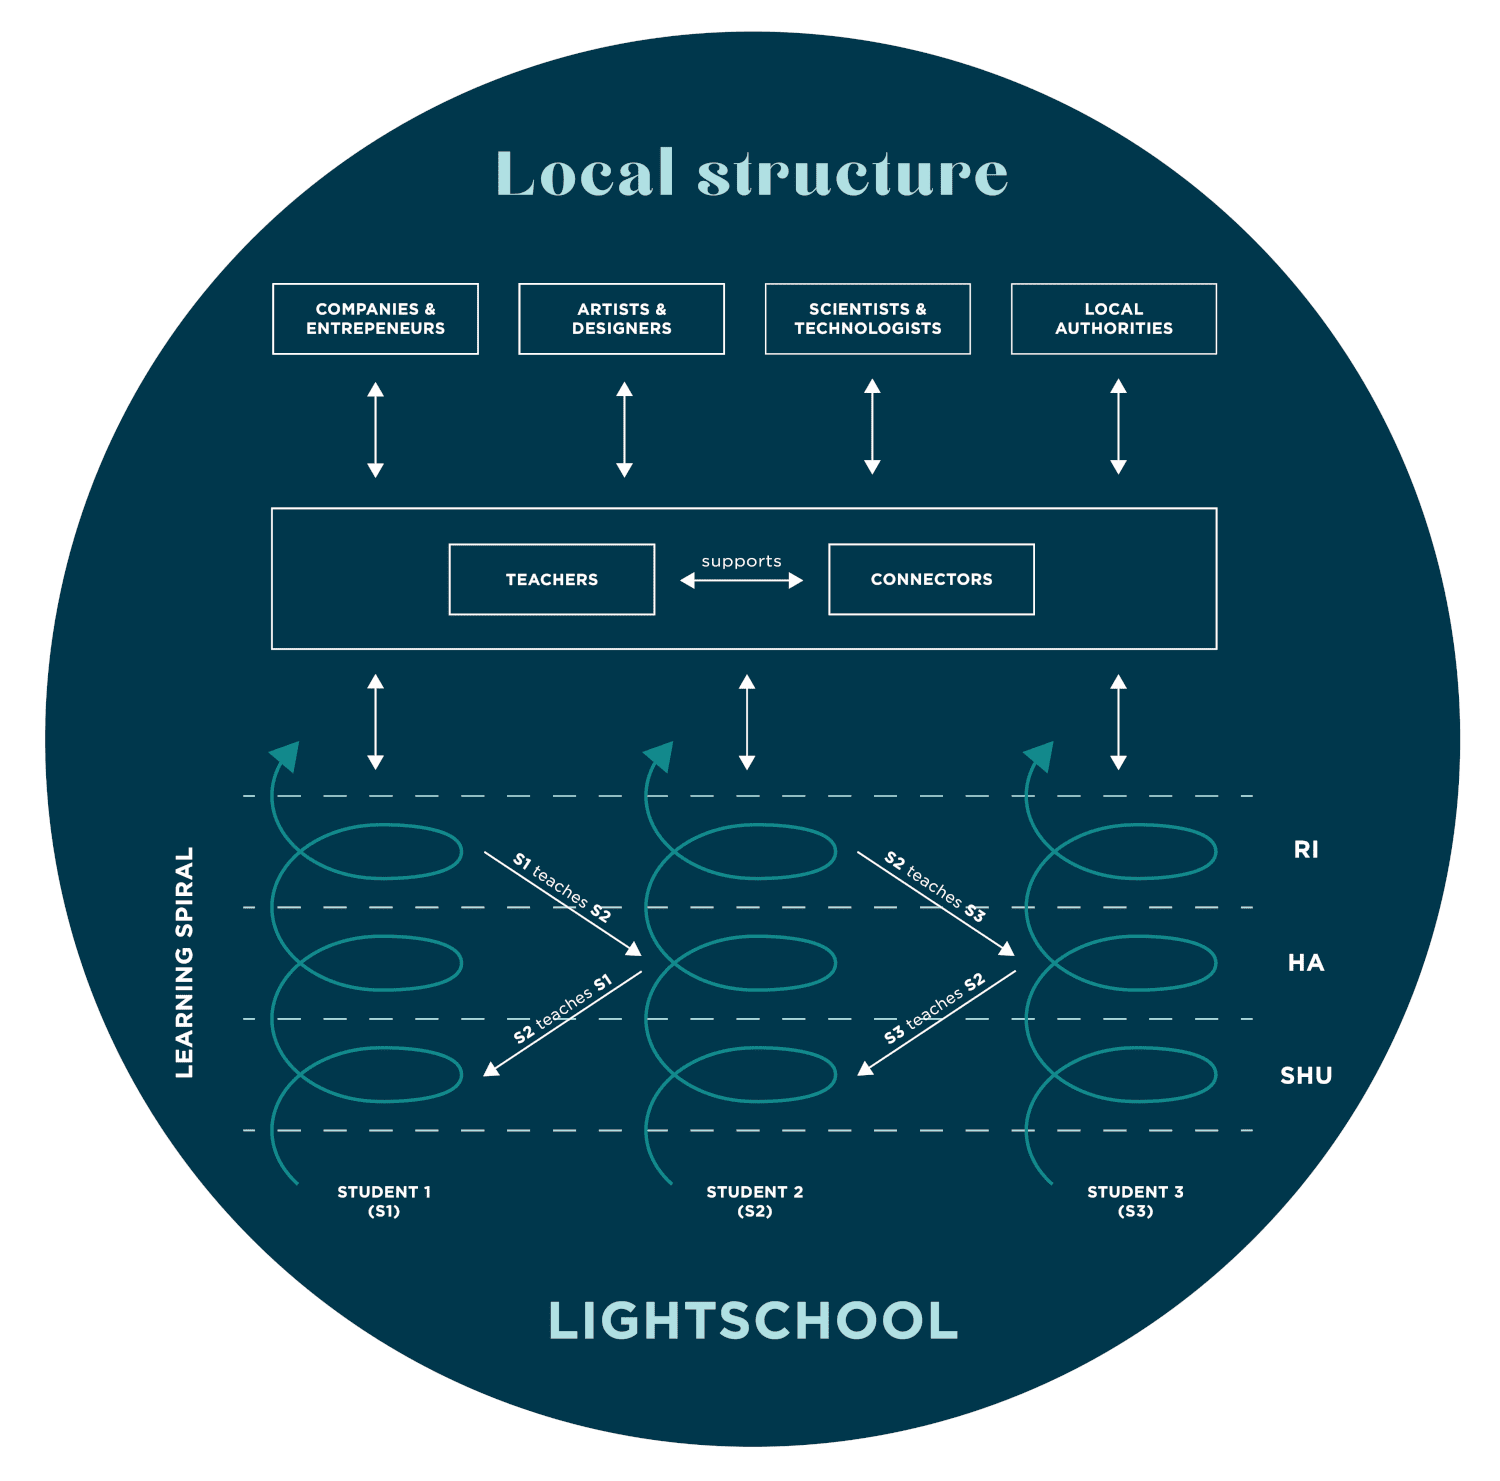 Lightschools image